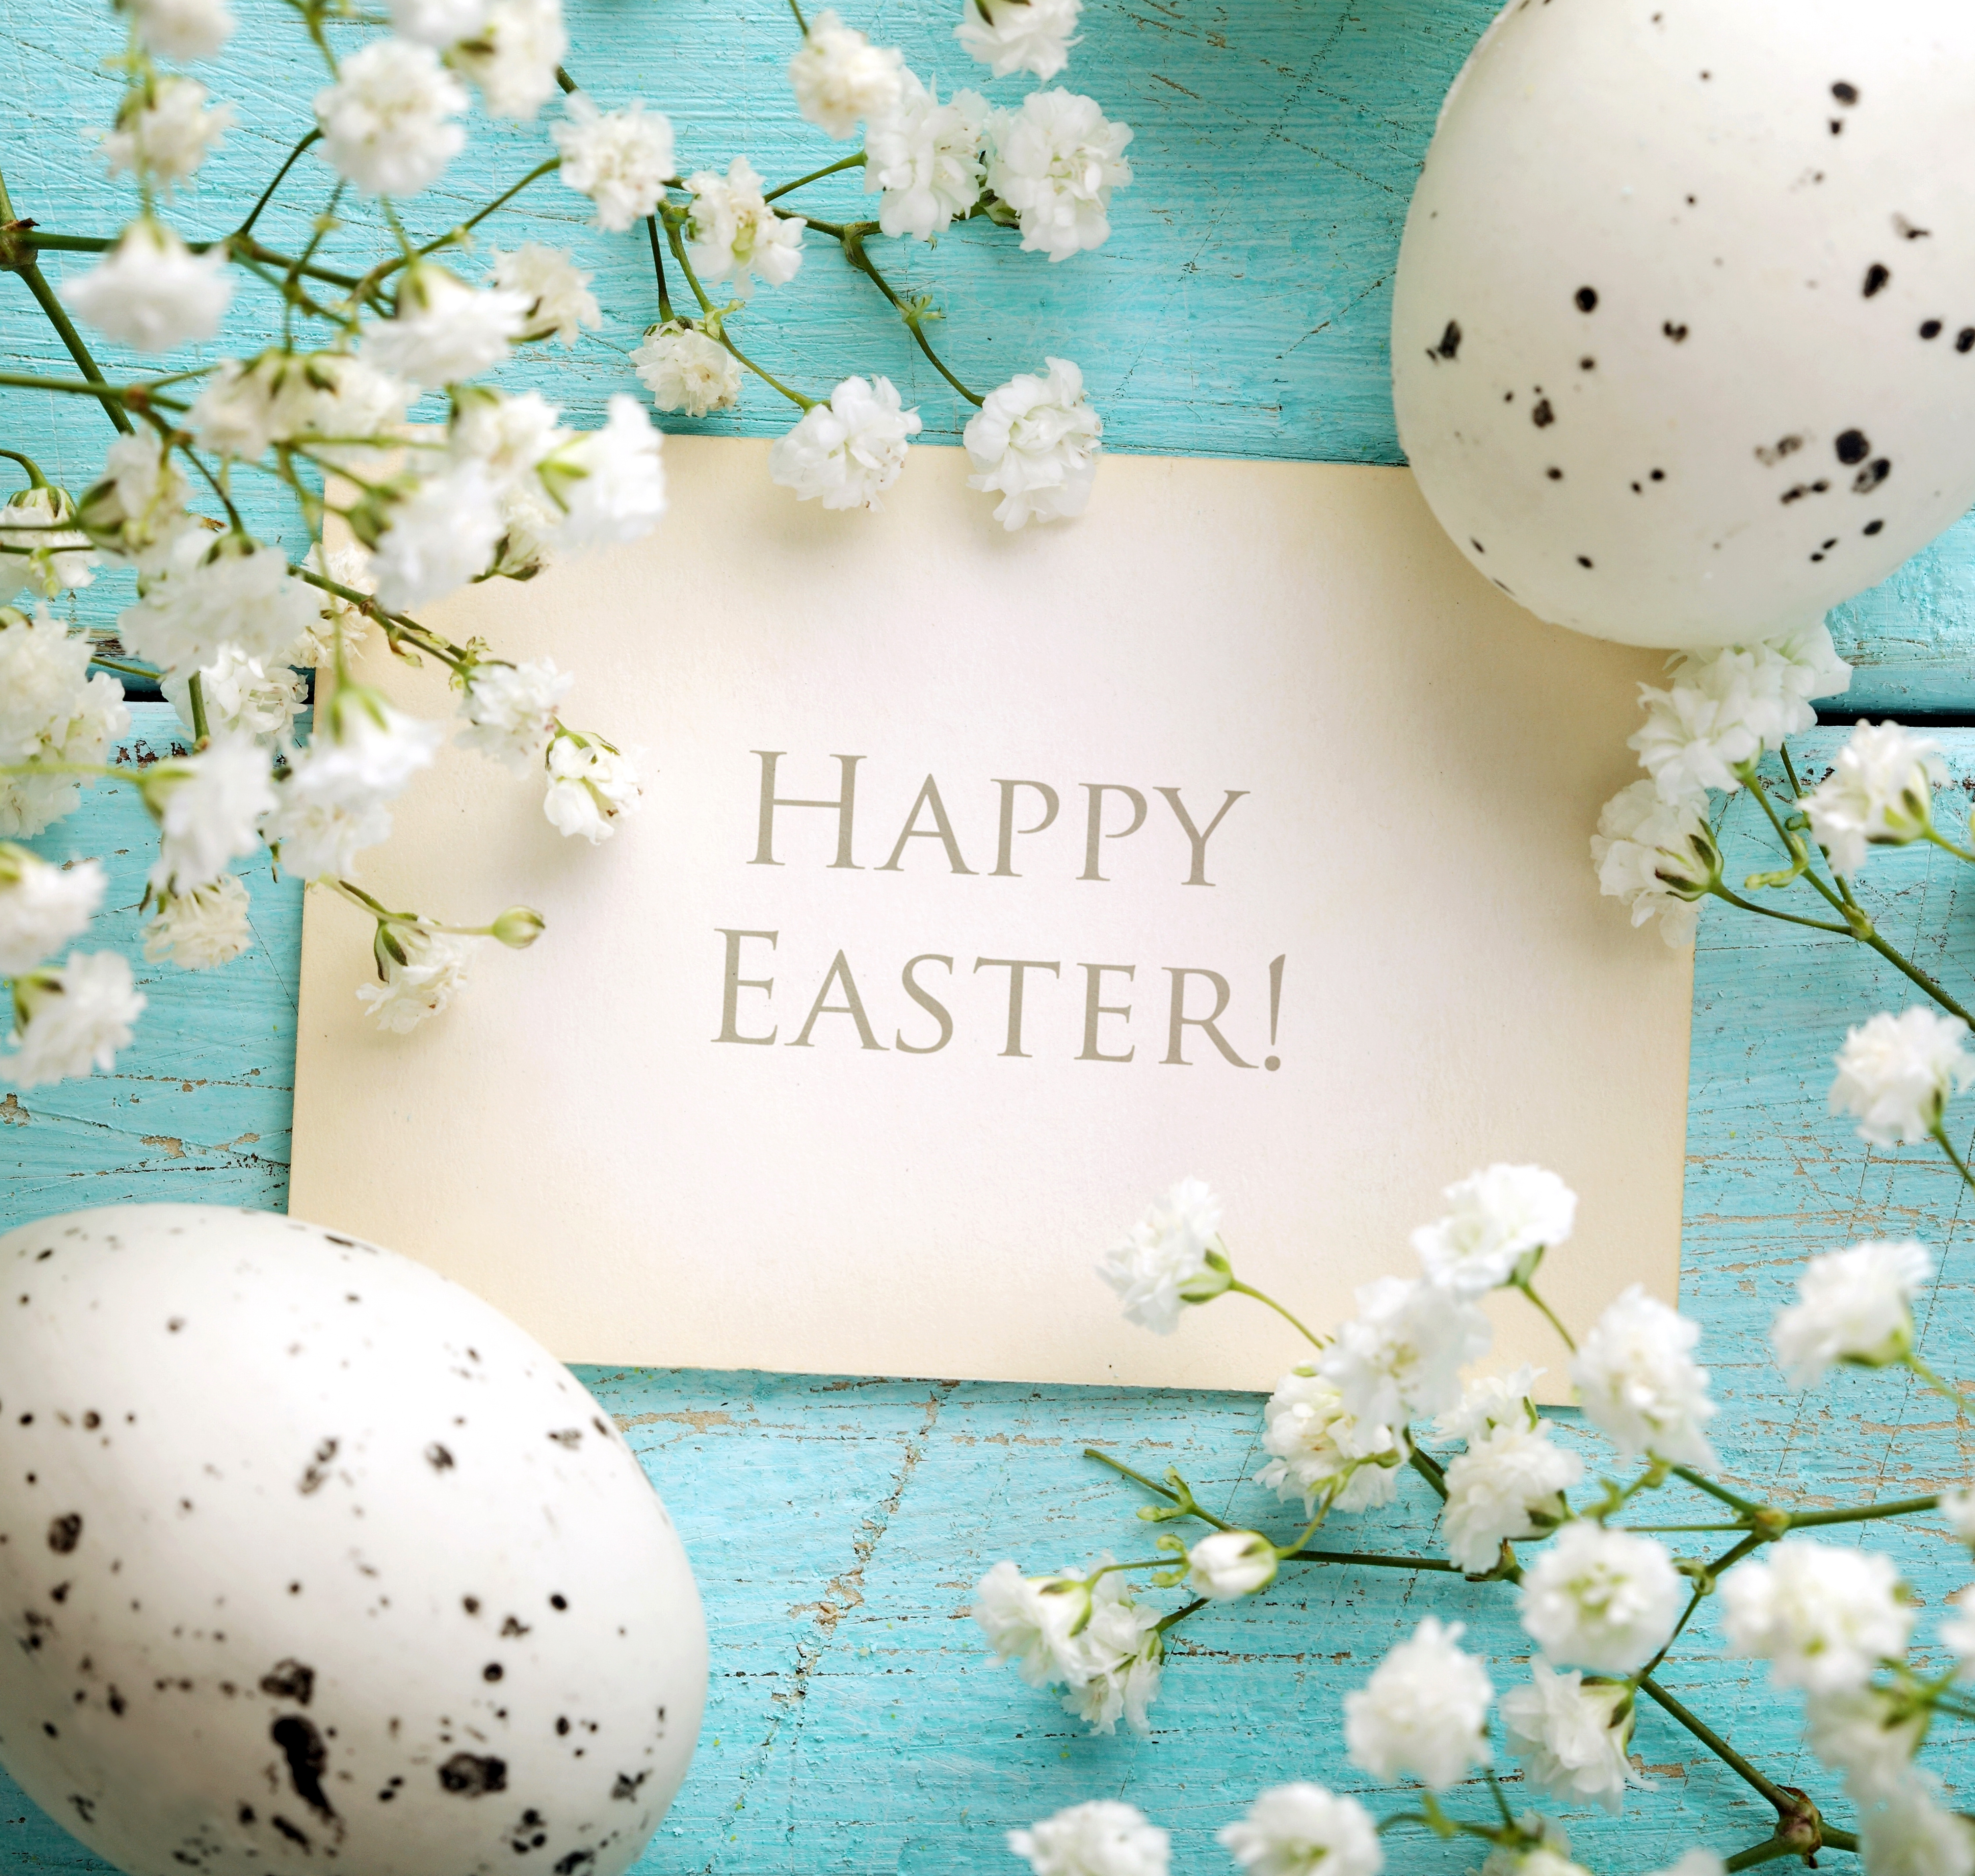 Happy Easter Image For Desktop Wallpaper